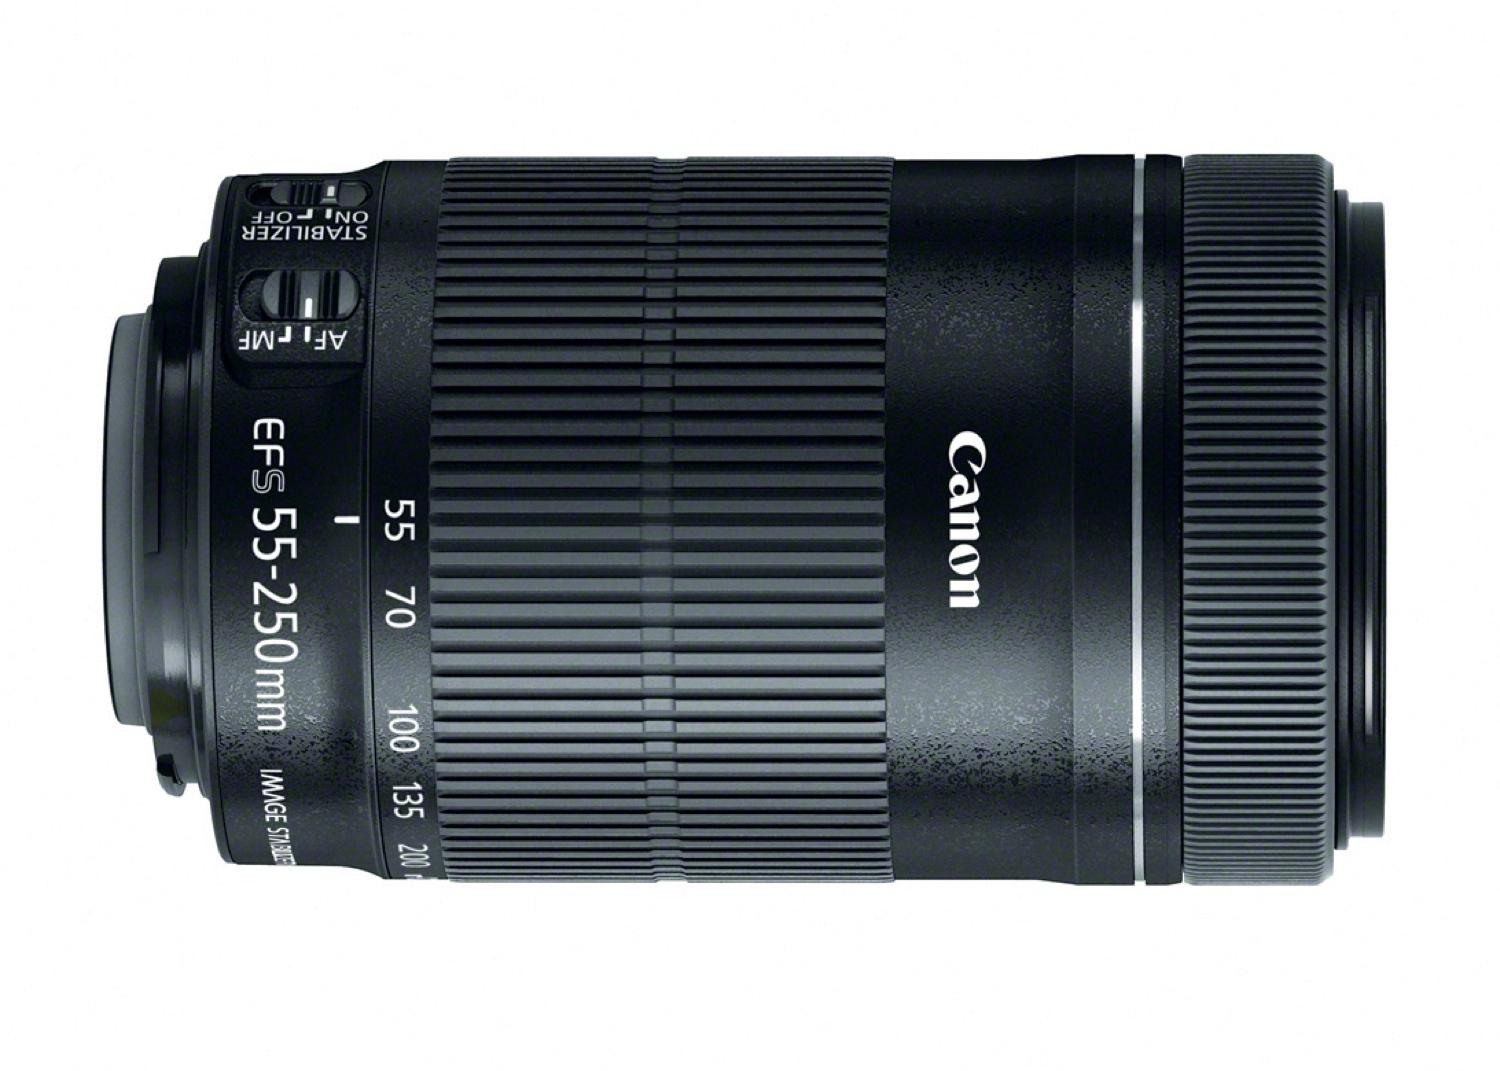 Canon 55-250mm f/4-5.6